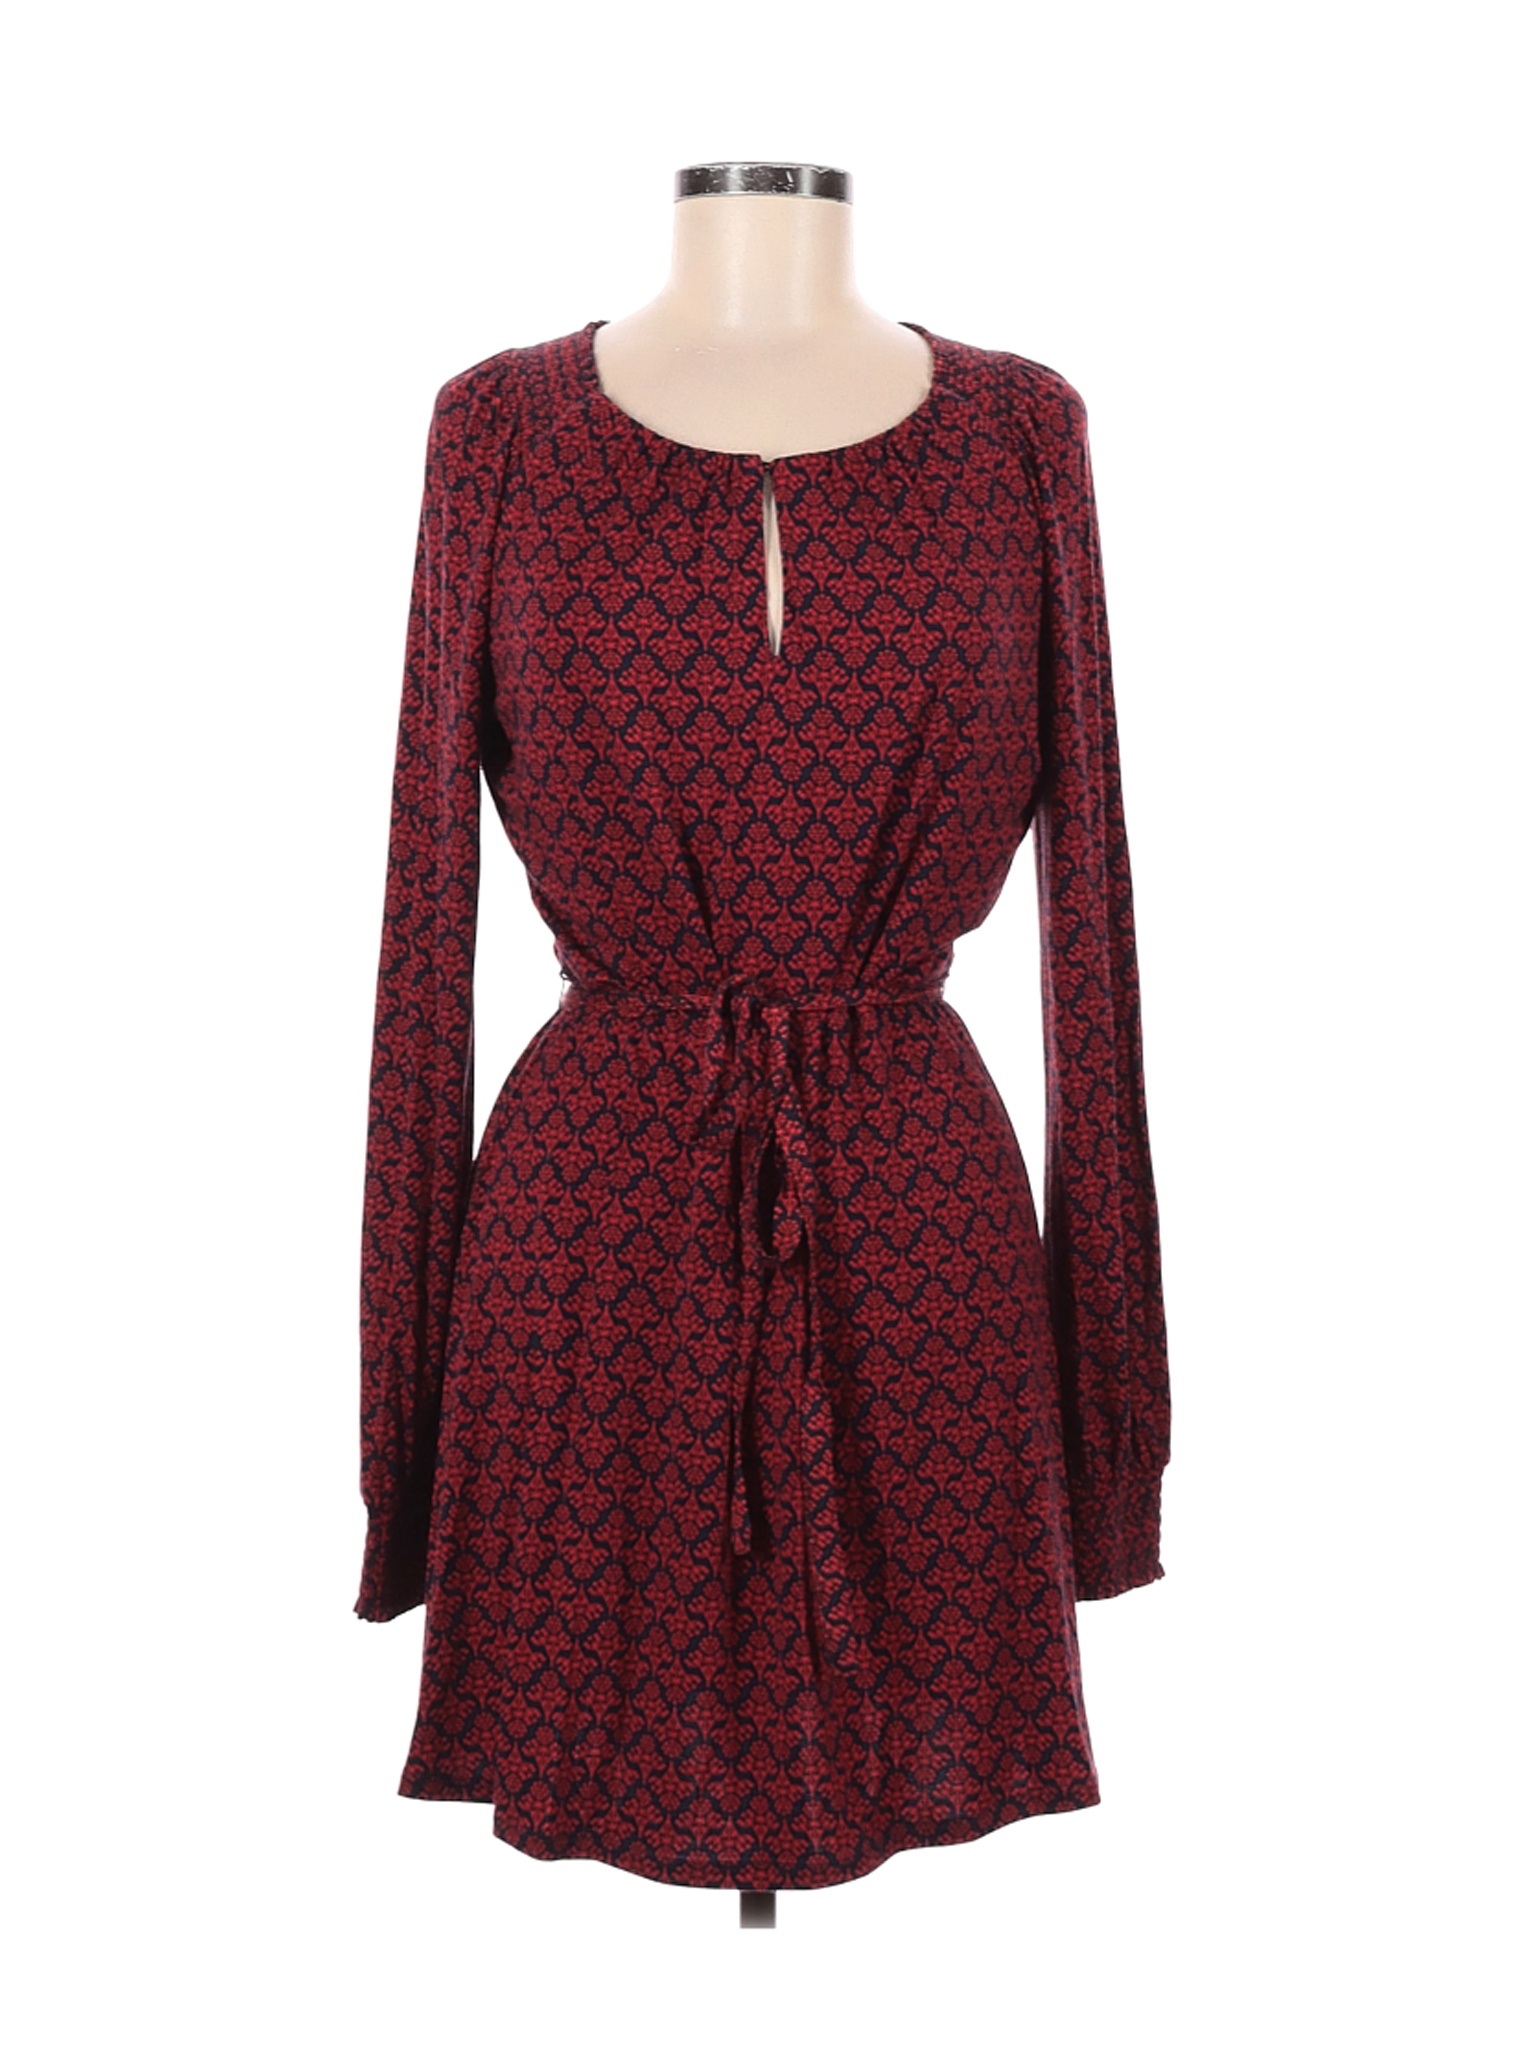 Boden Women Red Casual Dress 8 | eBay